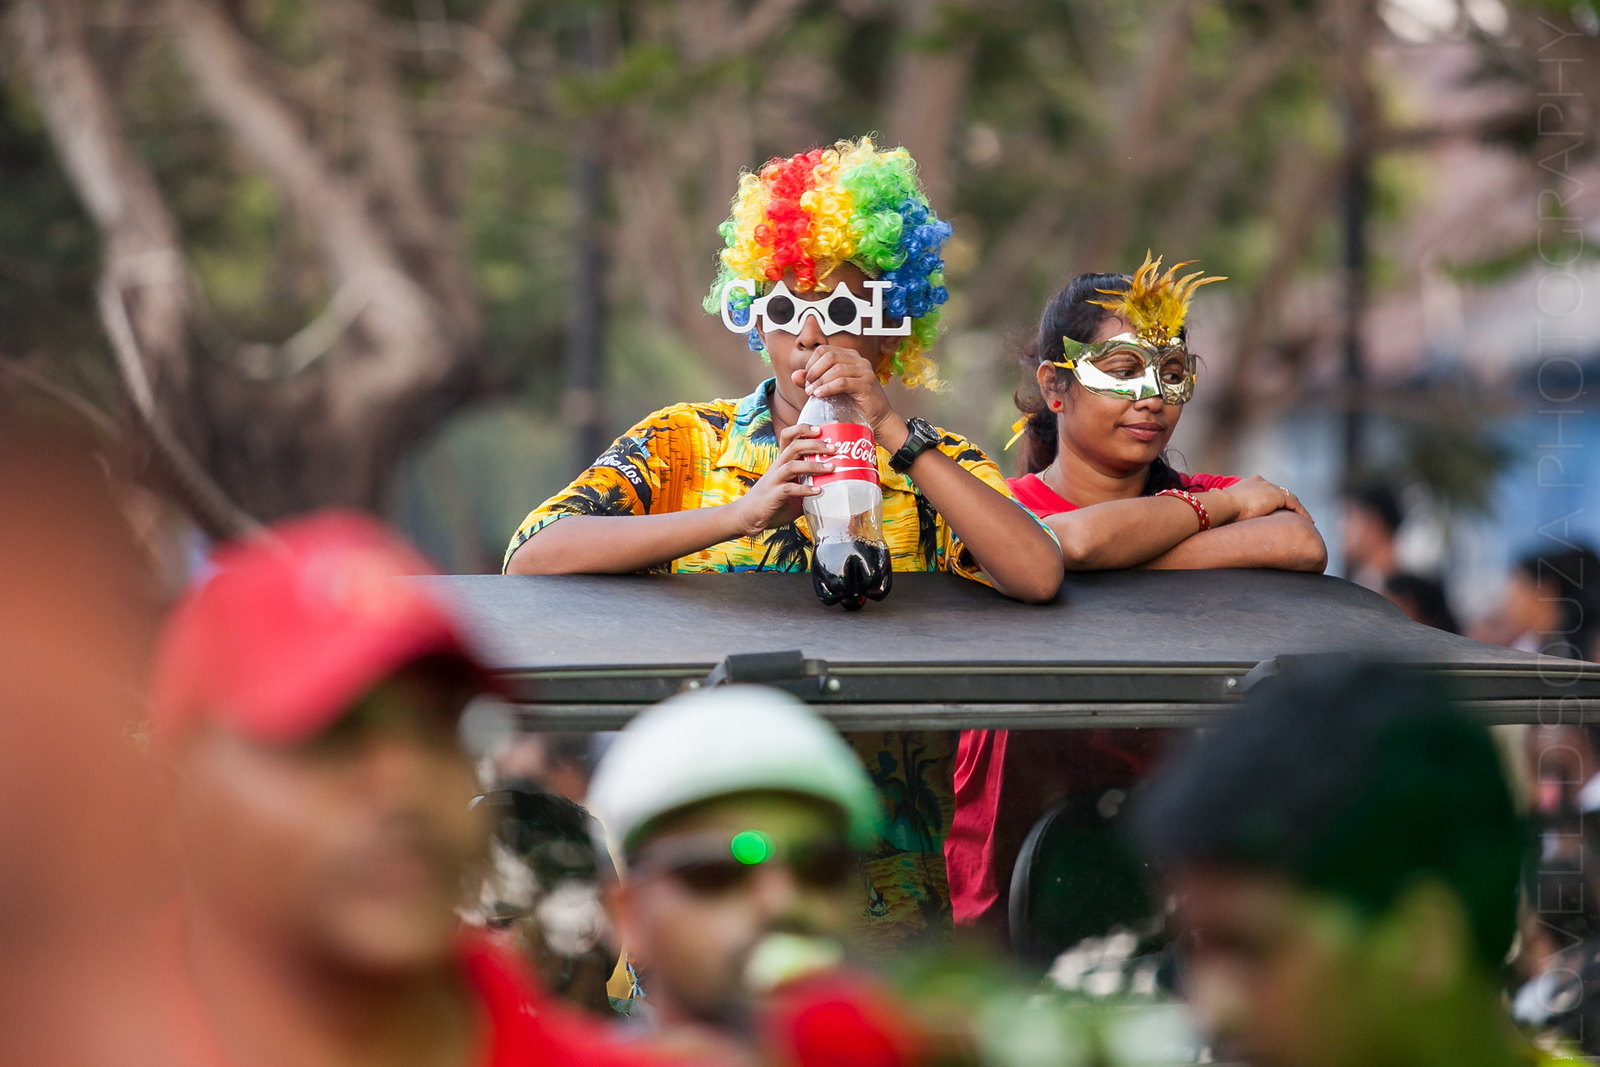 Goa Carnival - Panjim, 2015